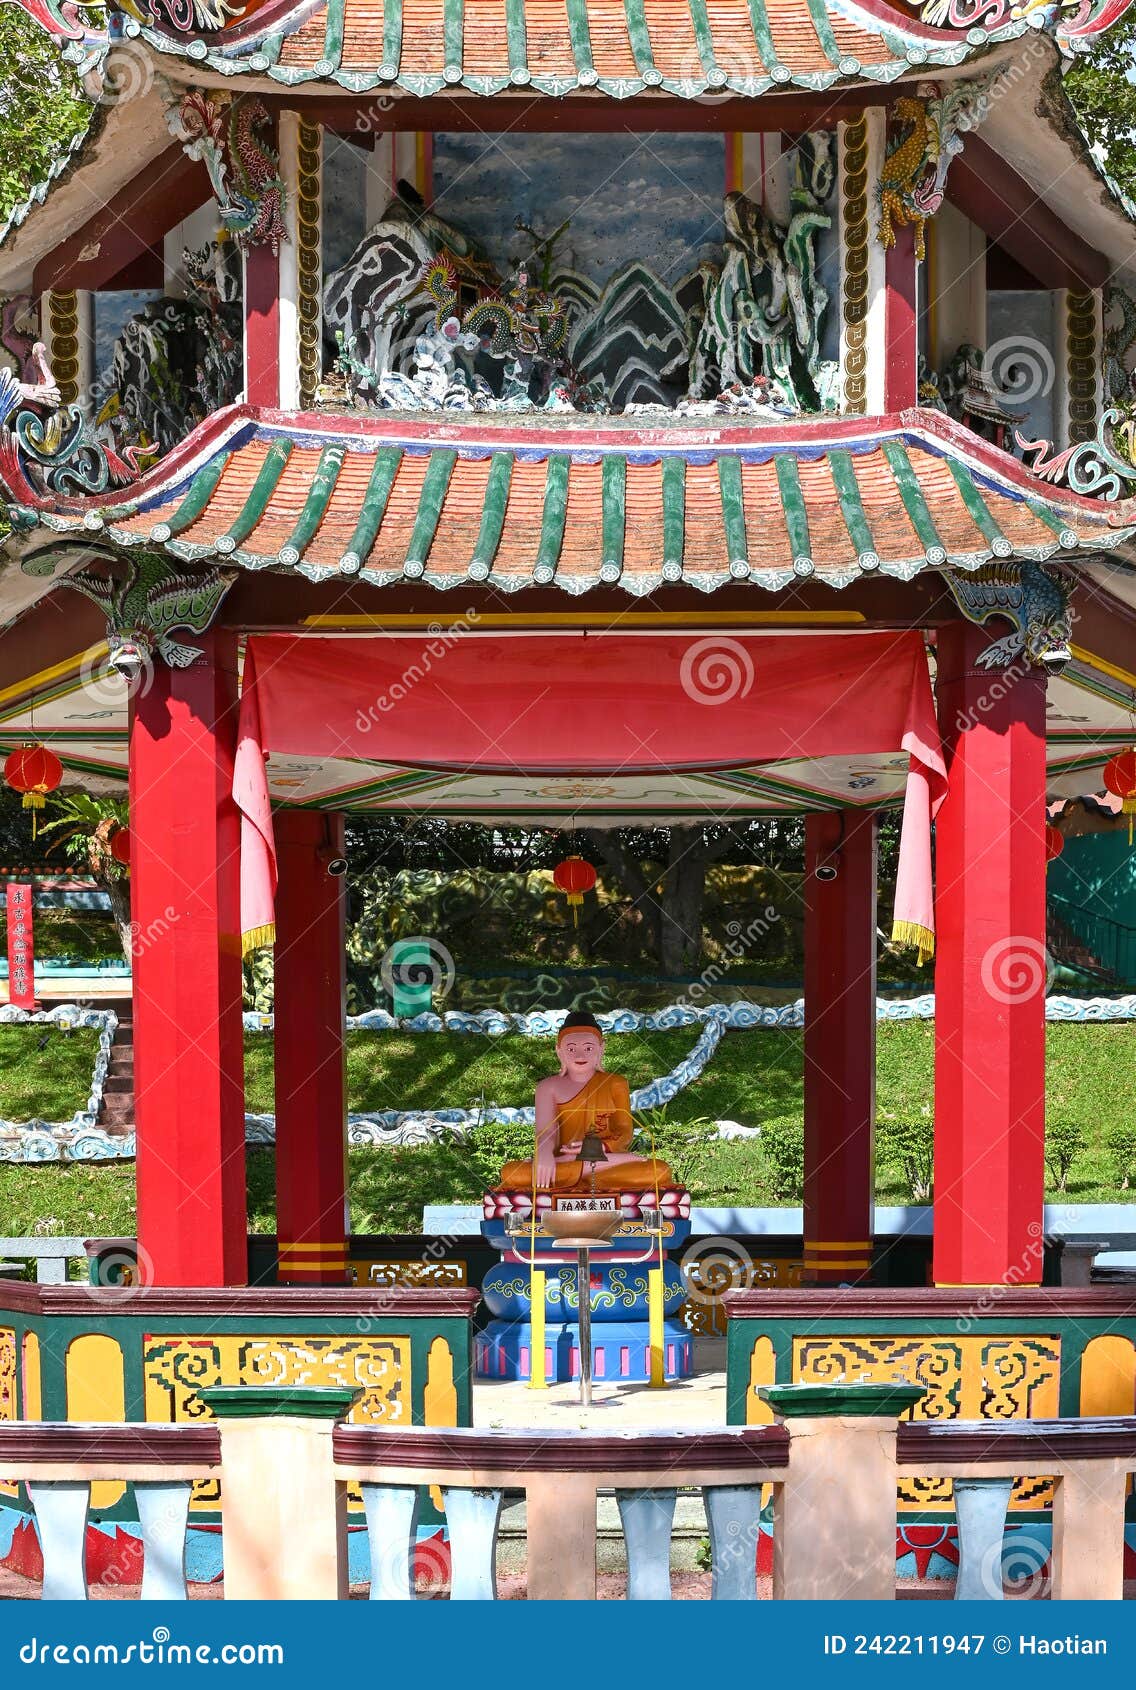 buddhist altar at haw par villa, singapore